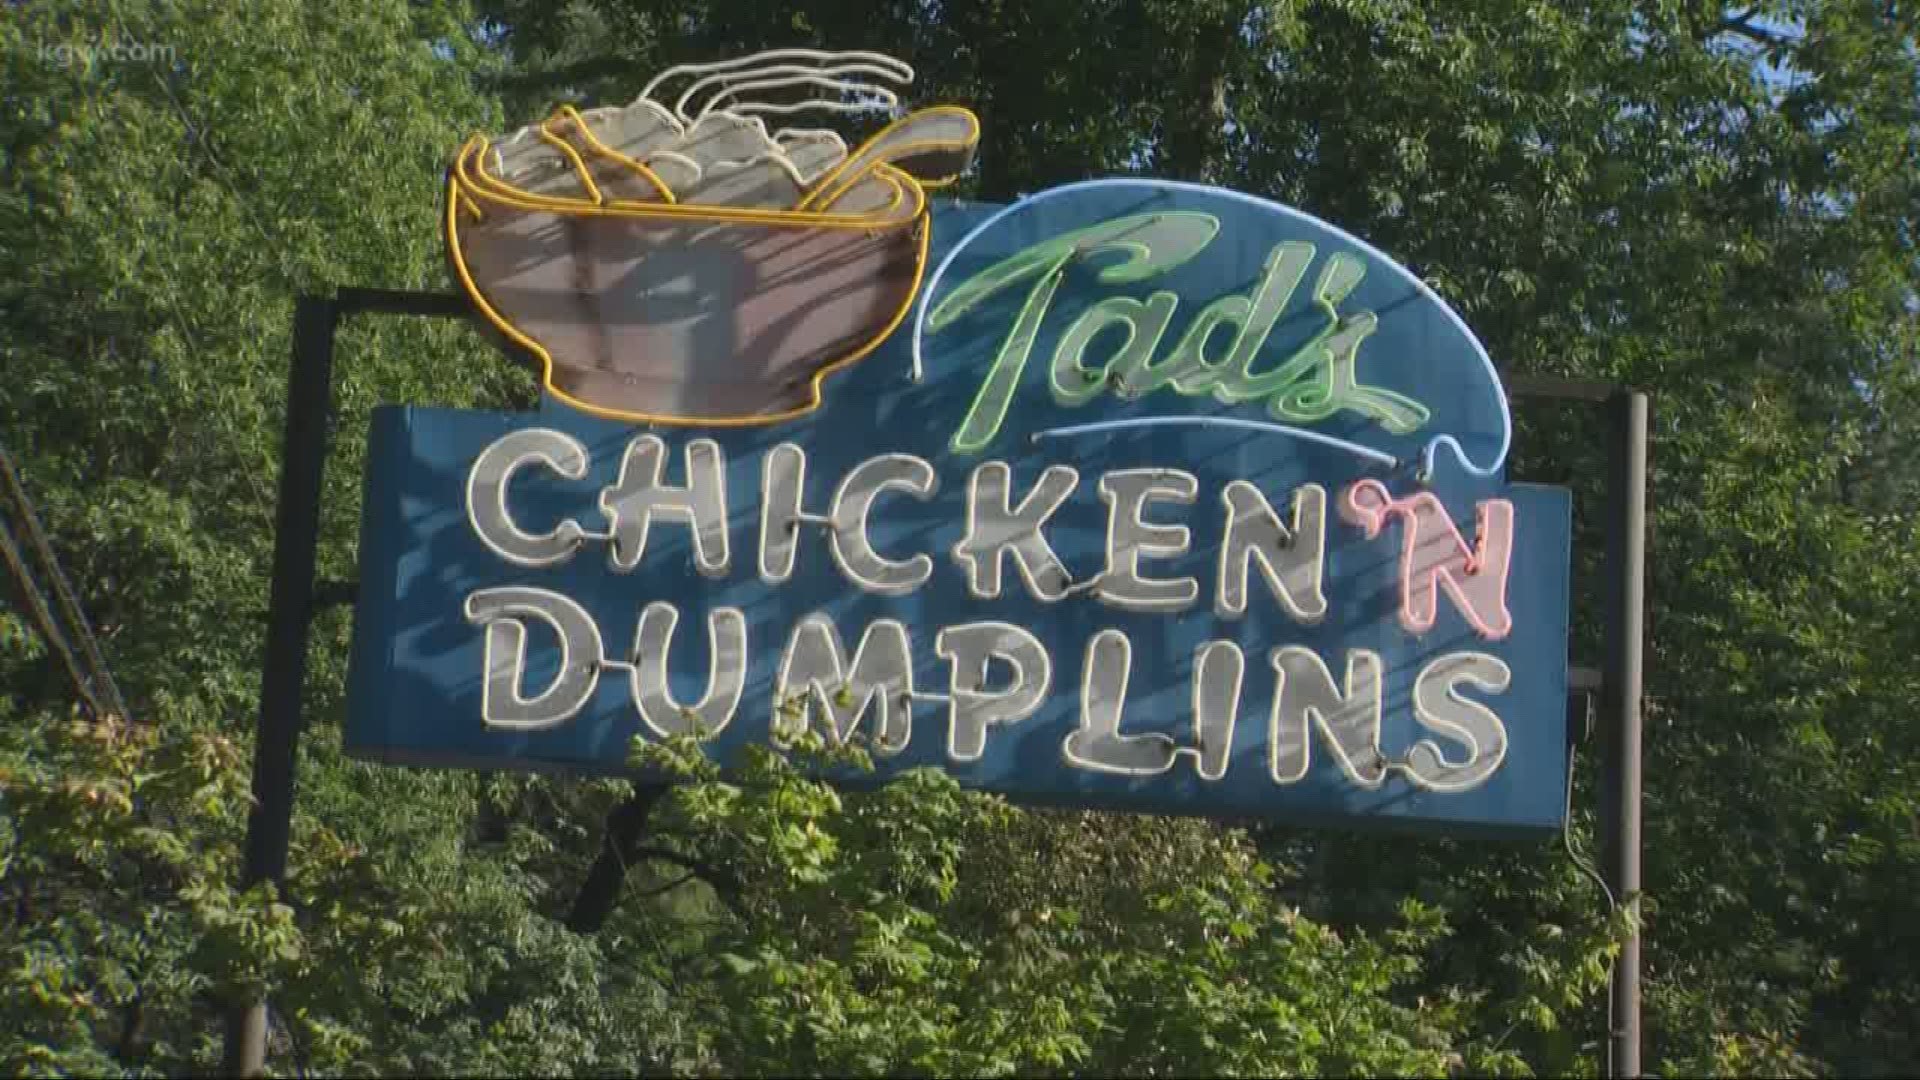 Historic Oregon Chicken and Dumplings restaurant for sale